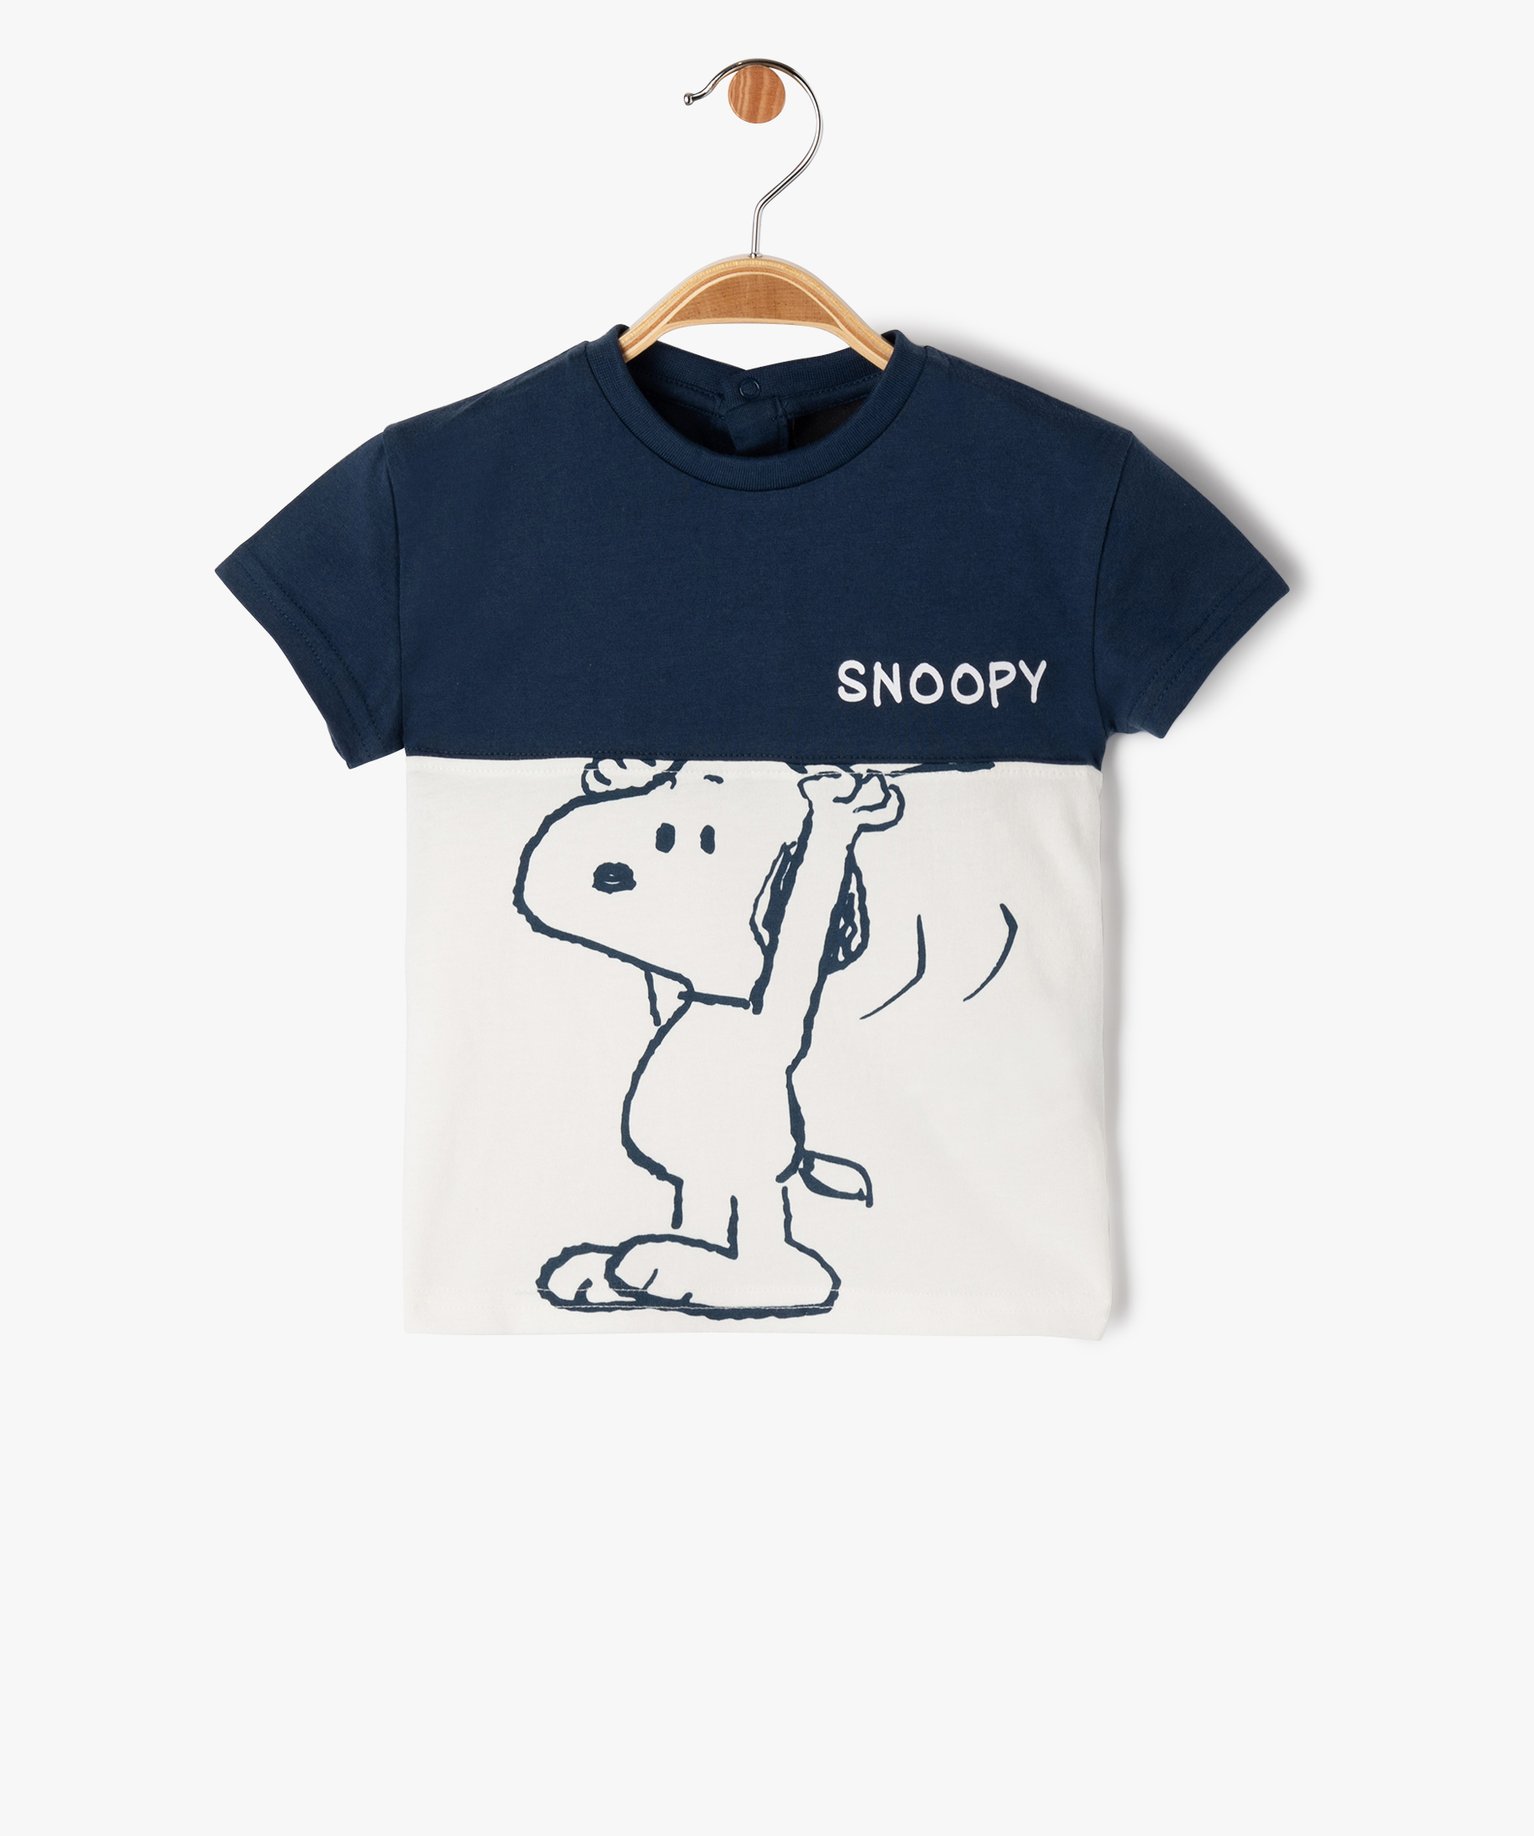 tee-shirt a manches courtes motif snoopy bebe garcon - peanuts bleu tee-shirts manches courtes